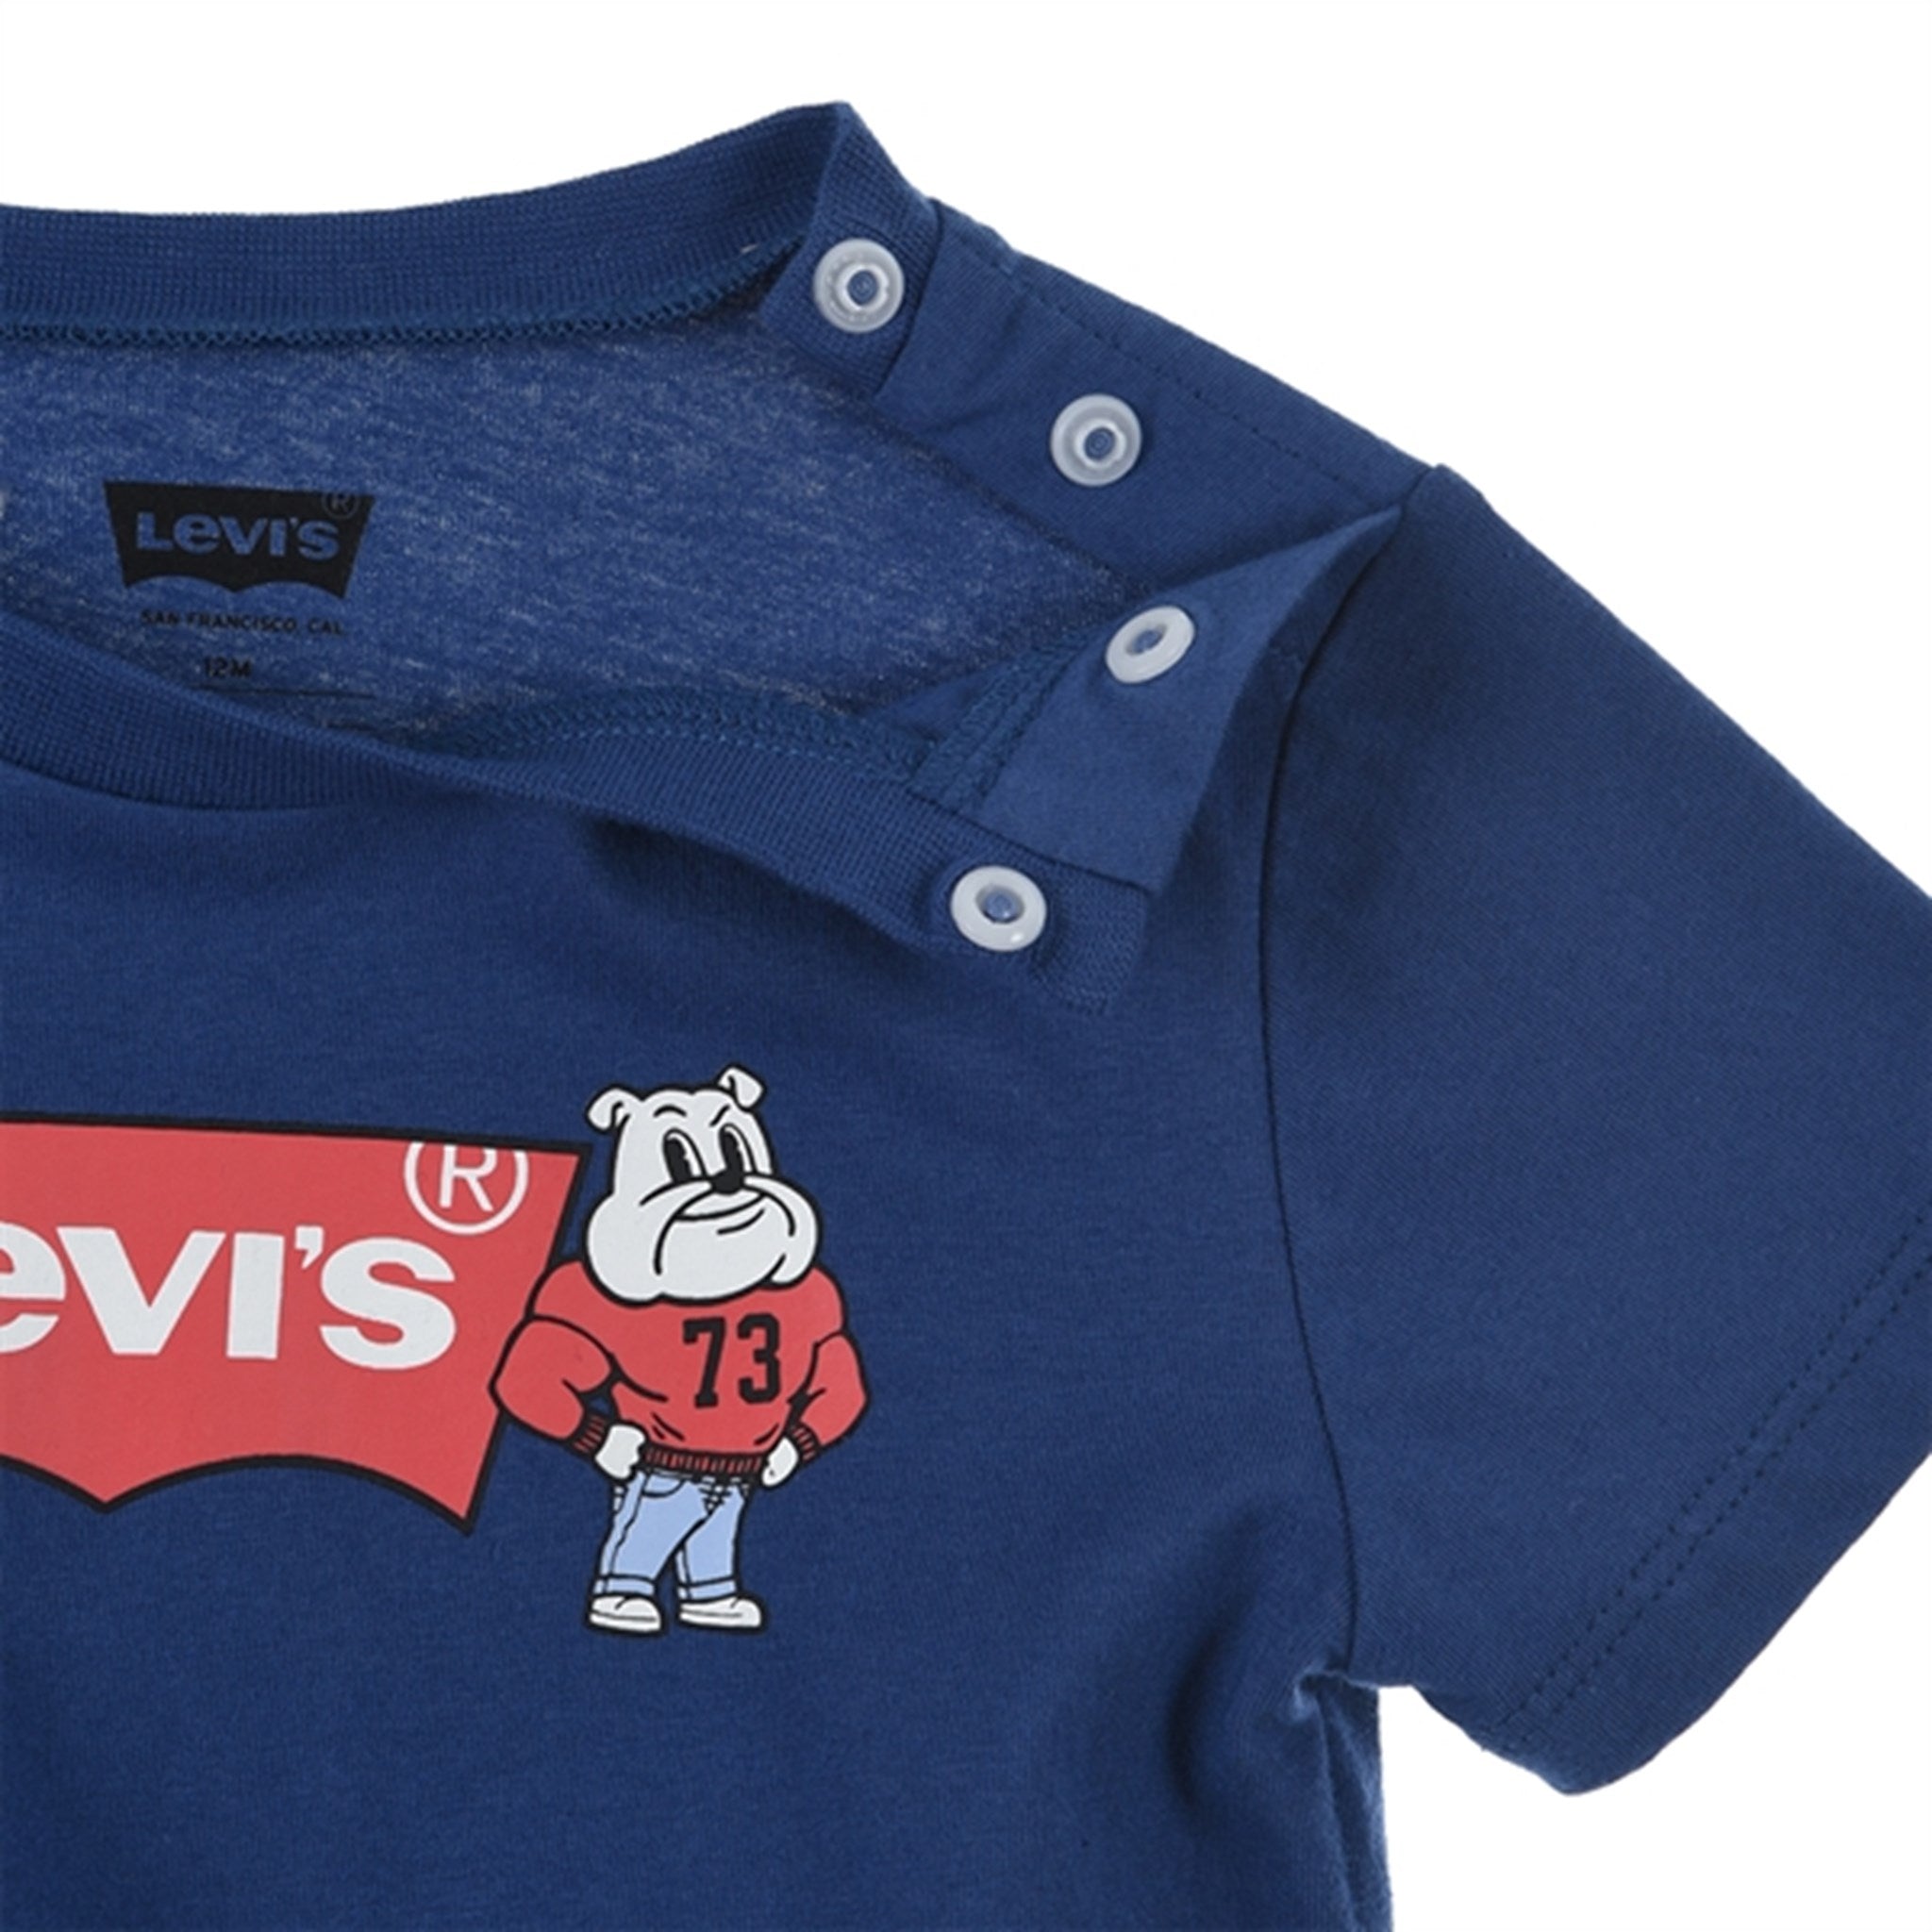 Levi's Mascot Batwing Shorts Sett Blue 2